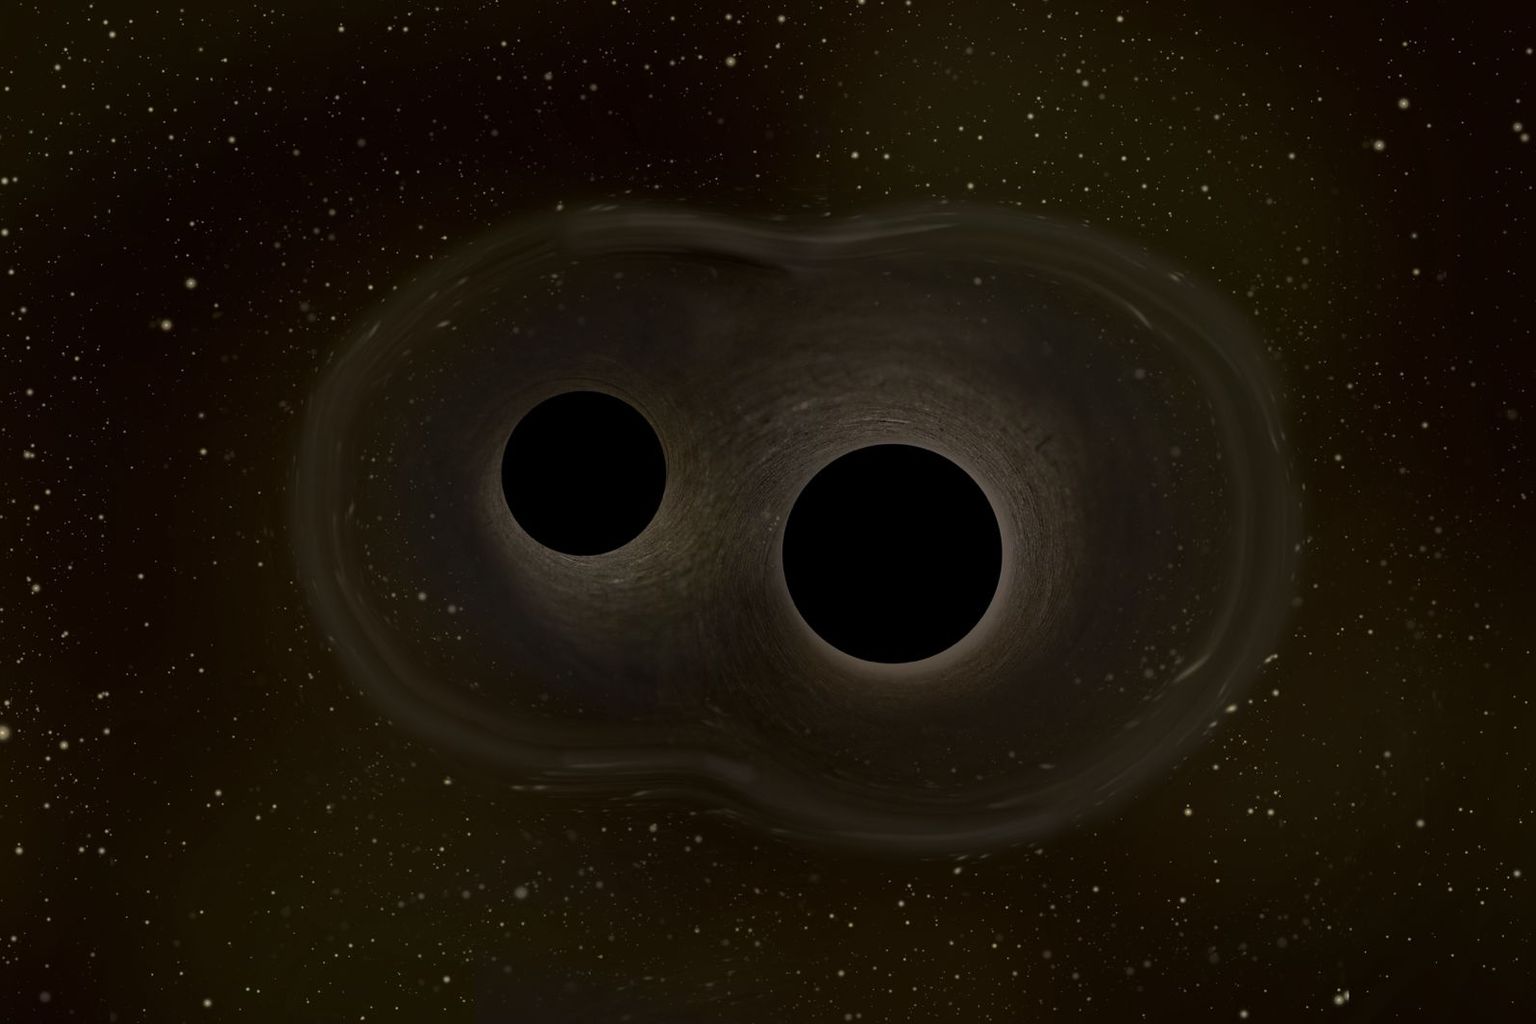 Two merging Black Holes